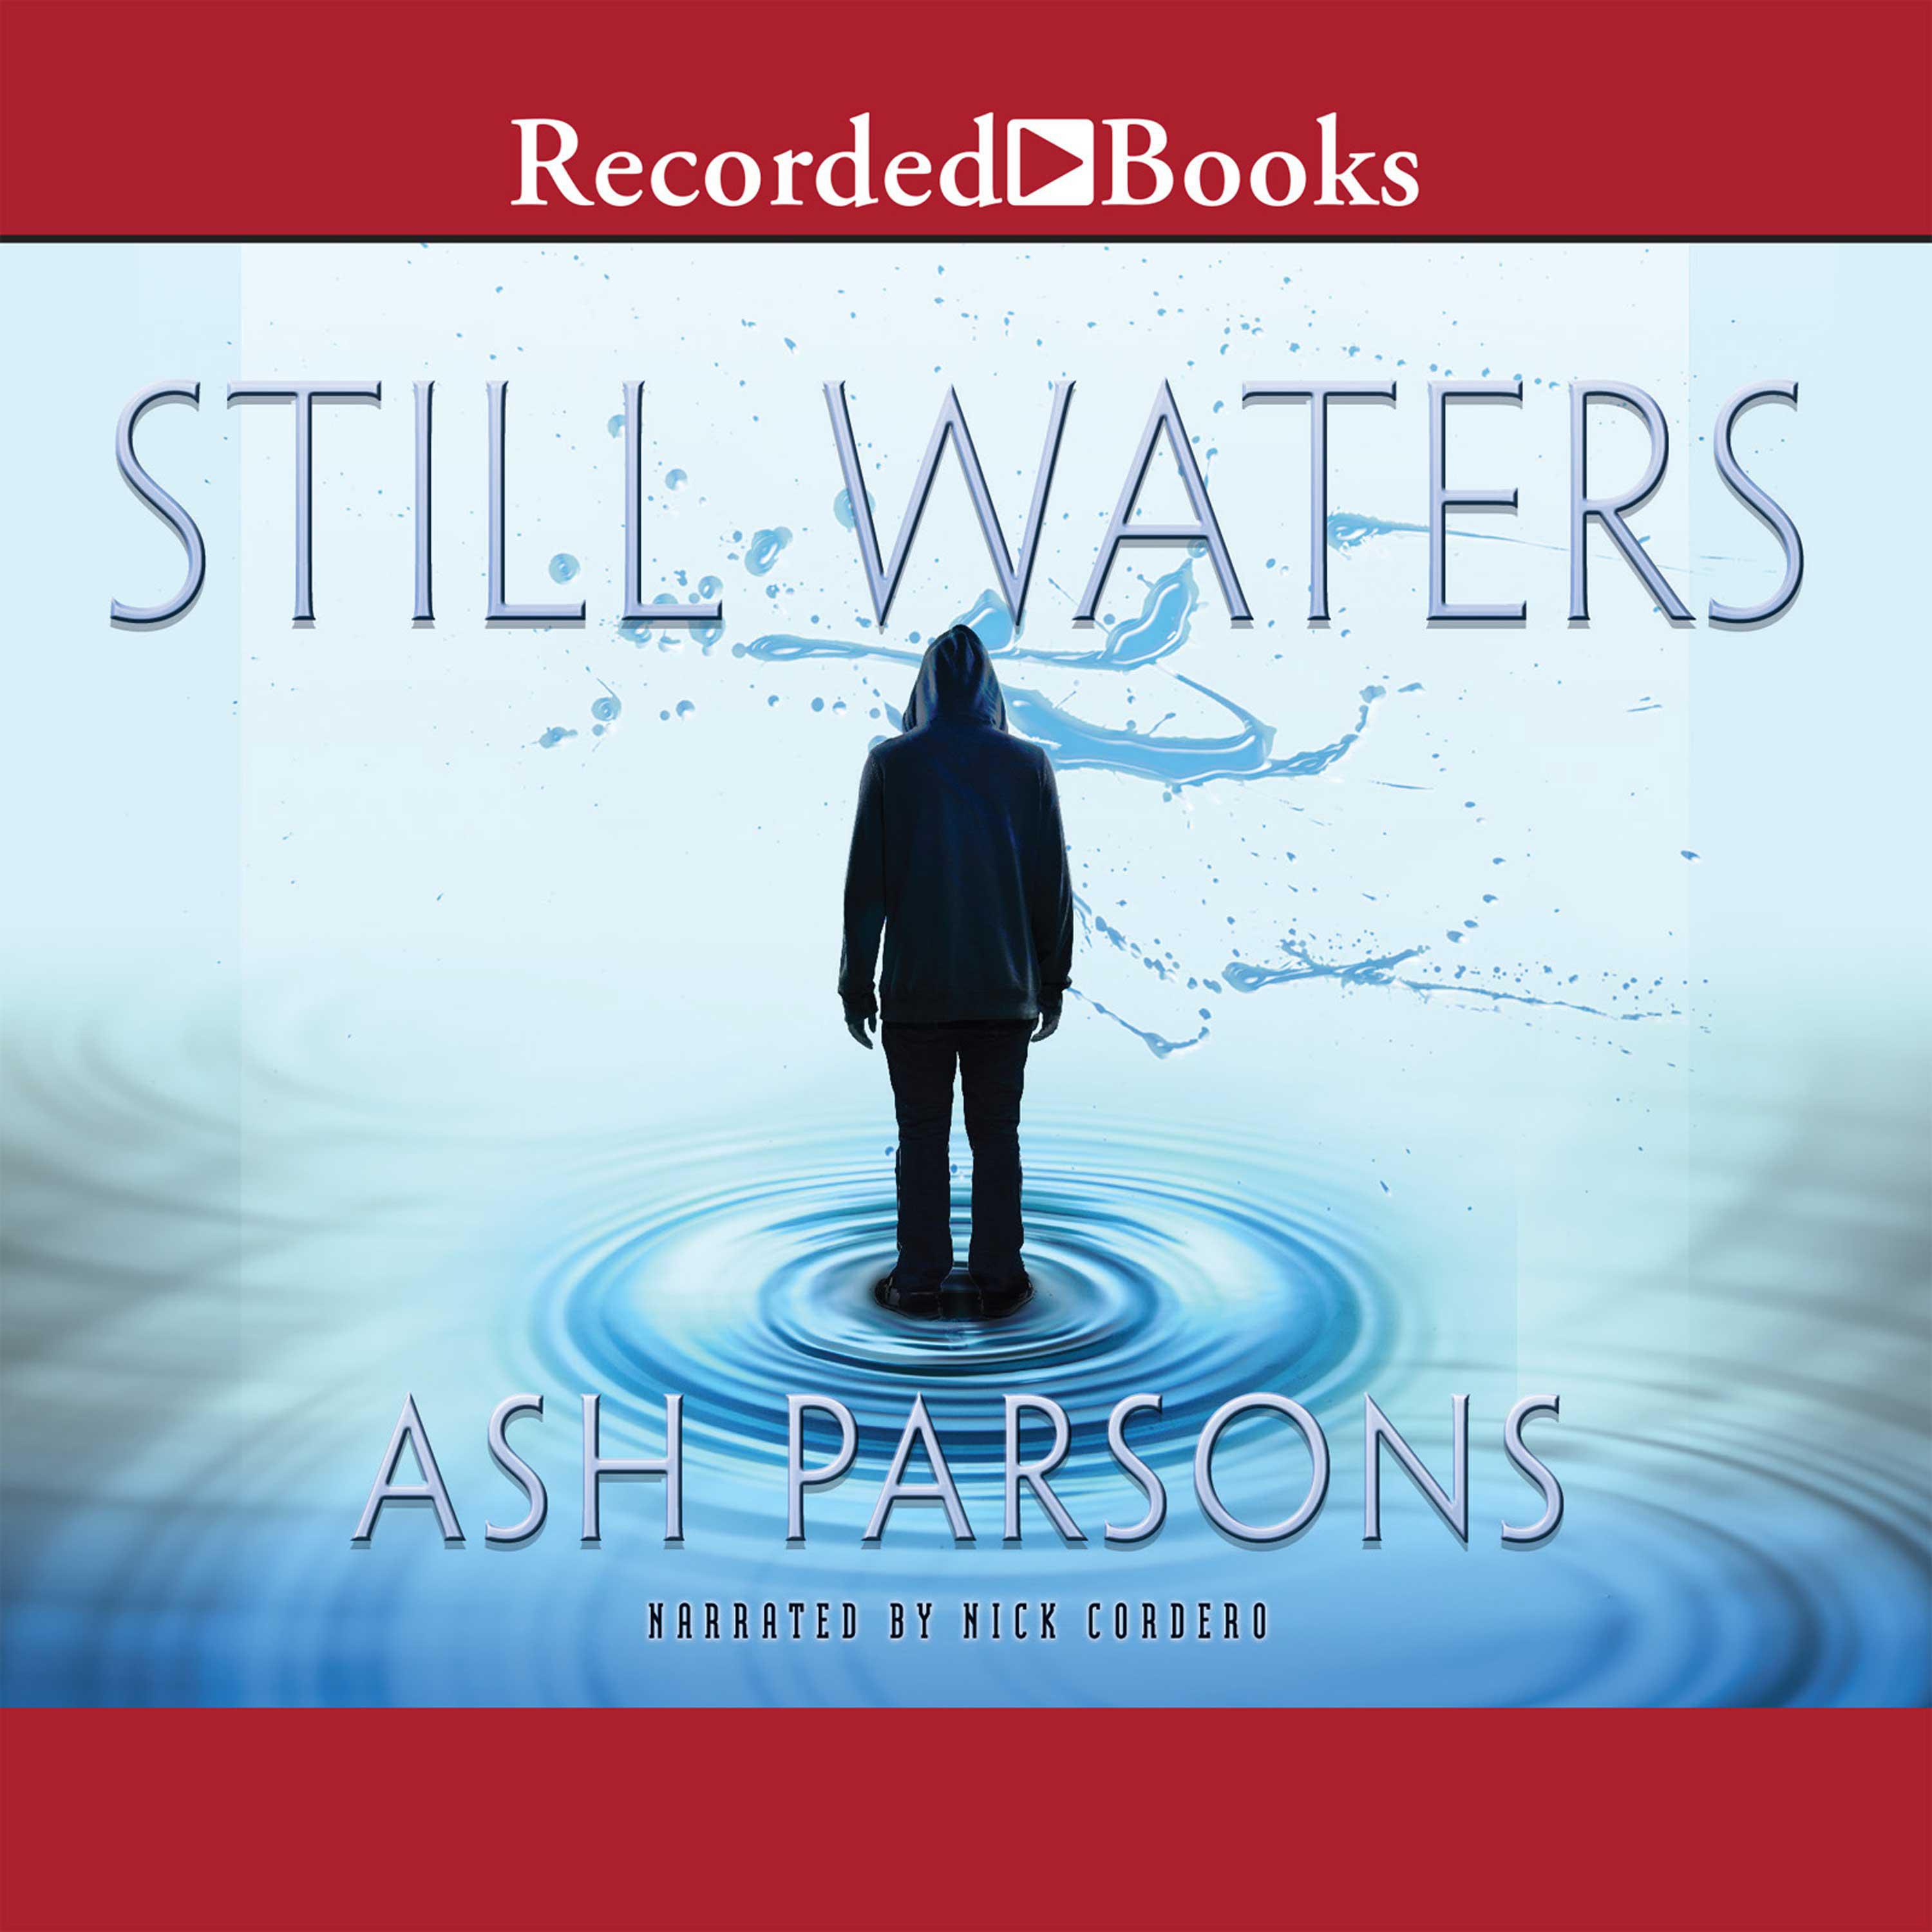 in deeper waters audiobook